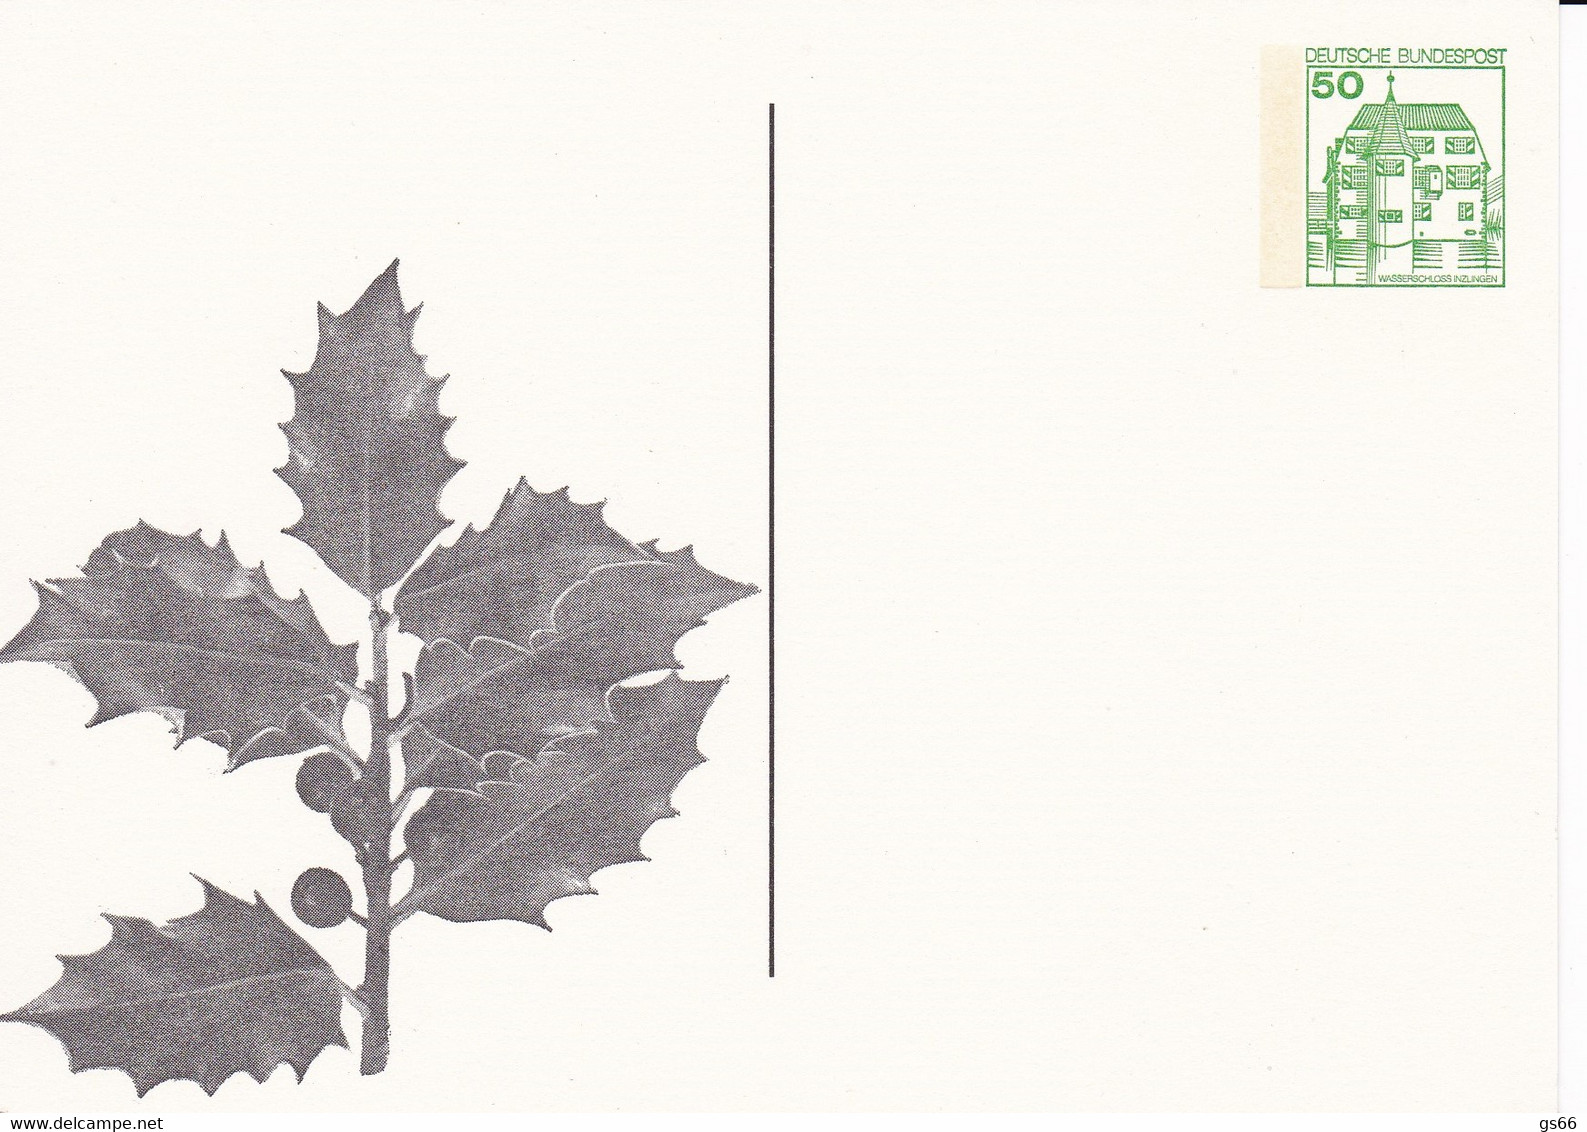 BRD, PP 104 A2/002,  BuSchl.  50,  Ilex-Stechpalme,  Olpe - Private Postcards - Mint